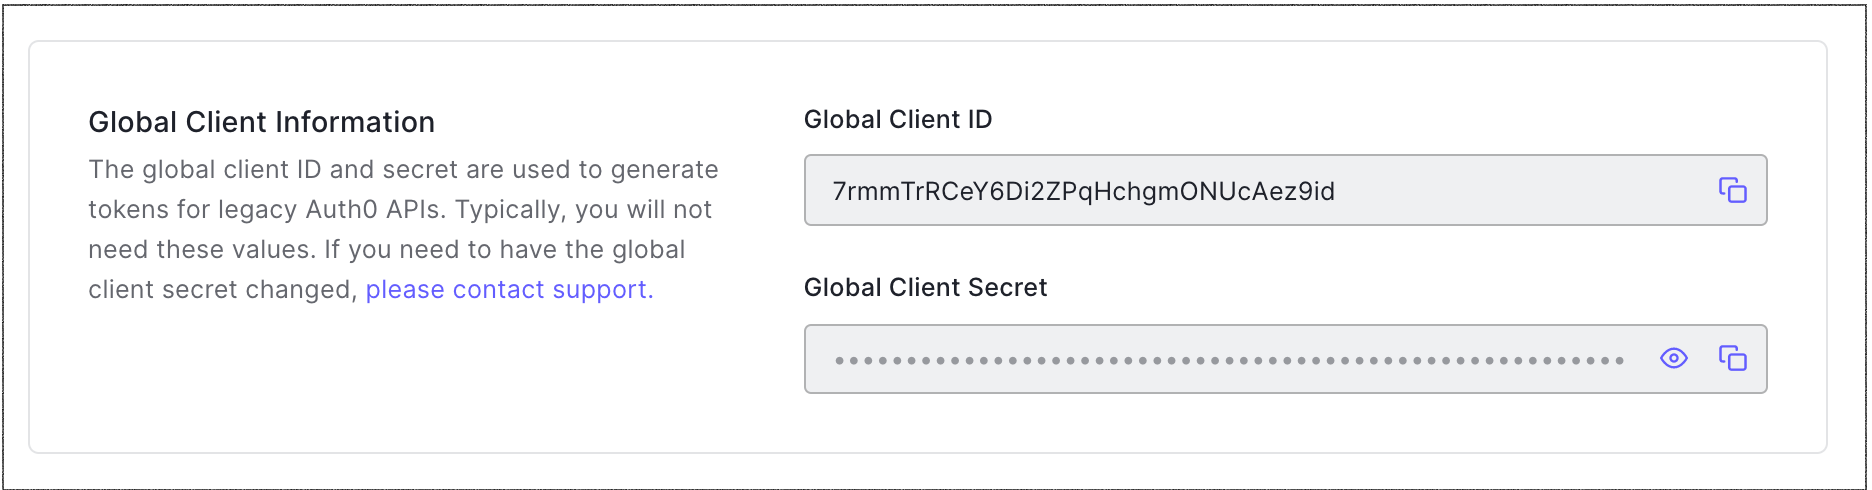 Dashboard Tenant Settings Advanced Tab Global Client Information